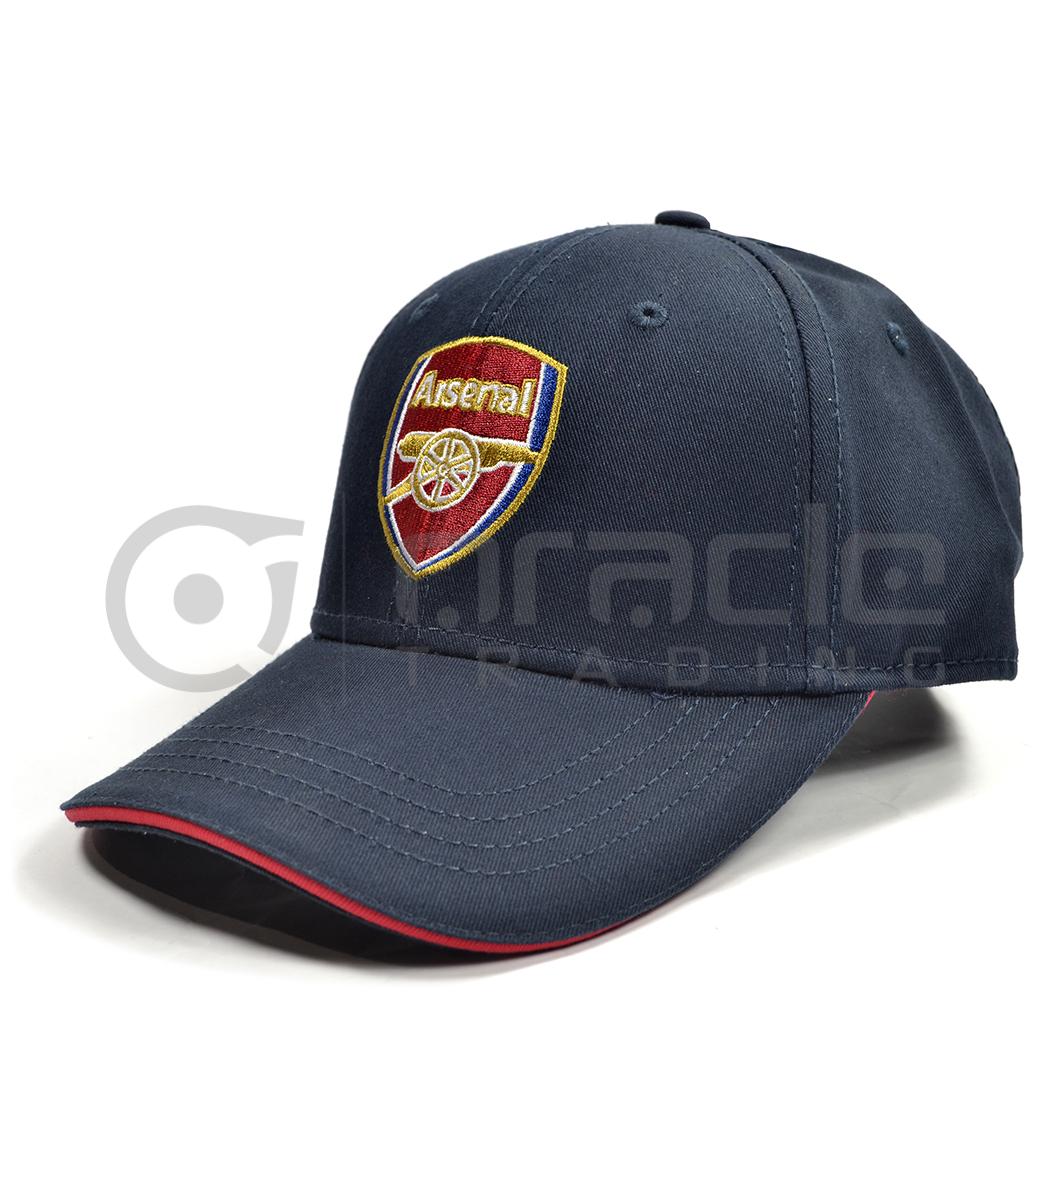 Arsenal Hat - Navy